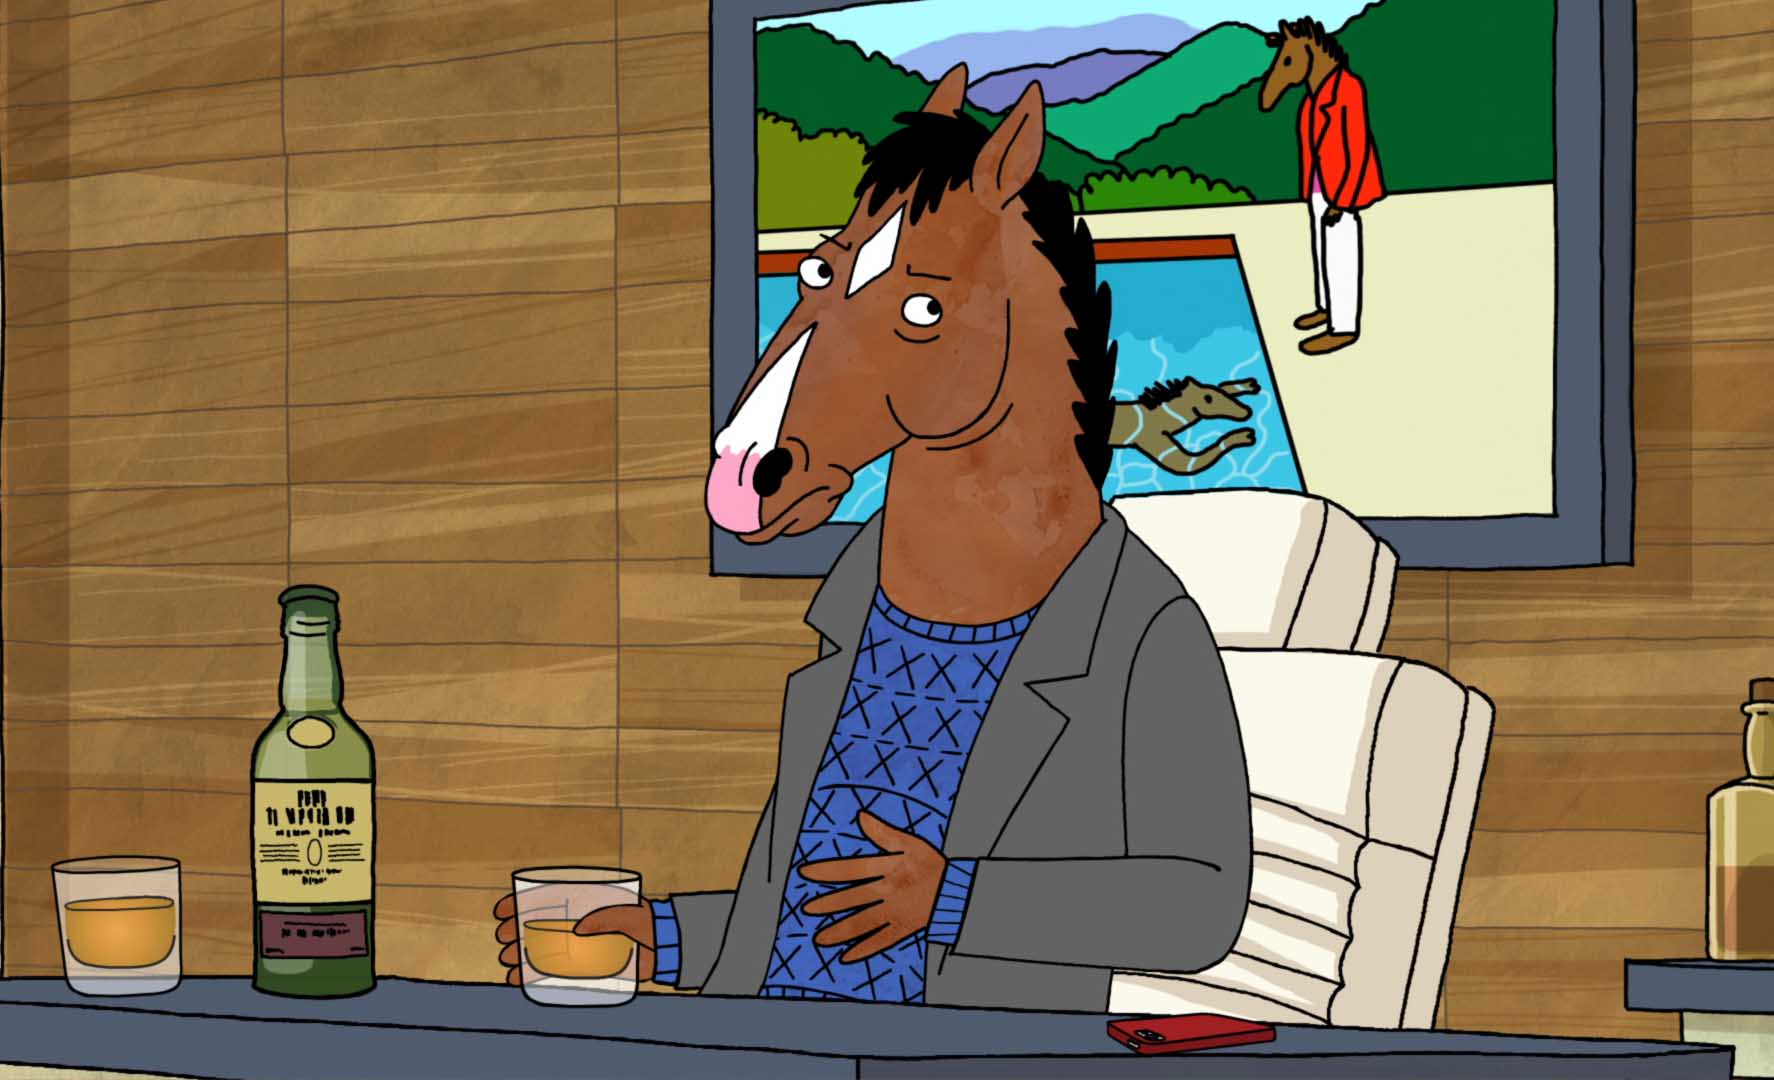 Netflix to Produce Its First Adult Animation, BoJack Horseman